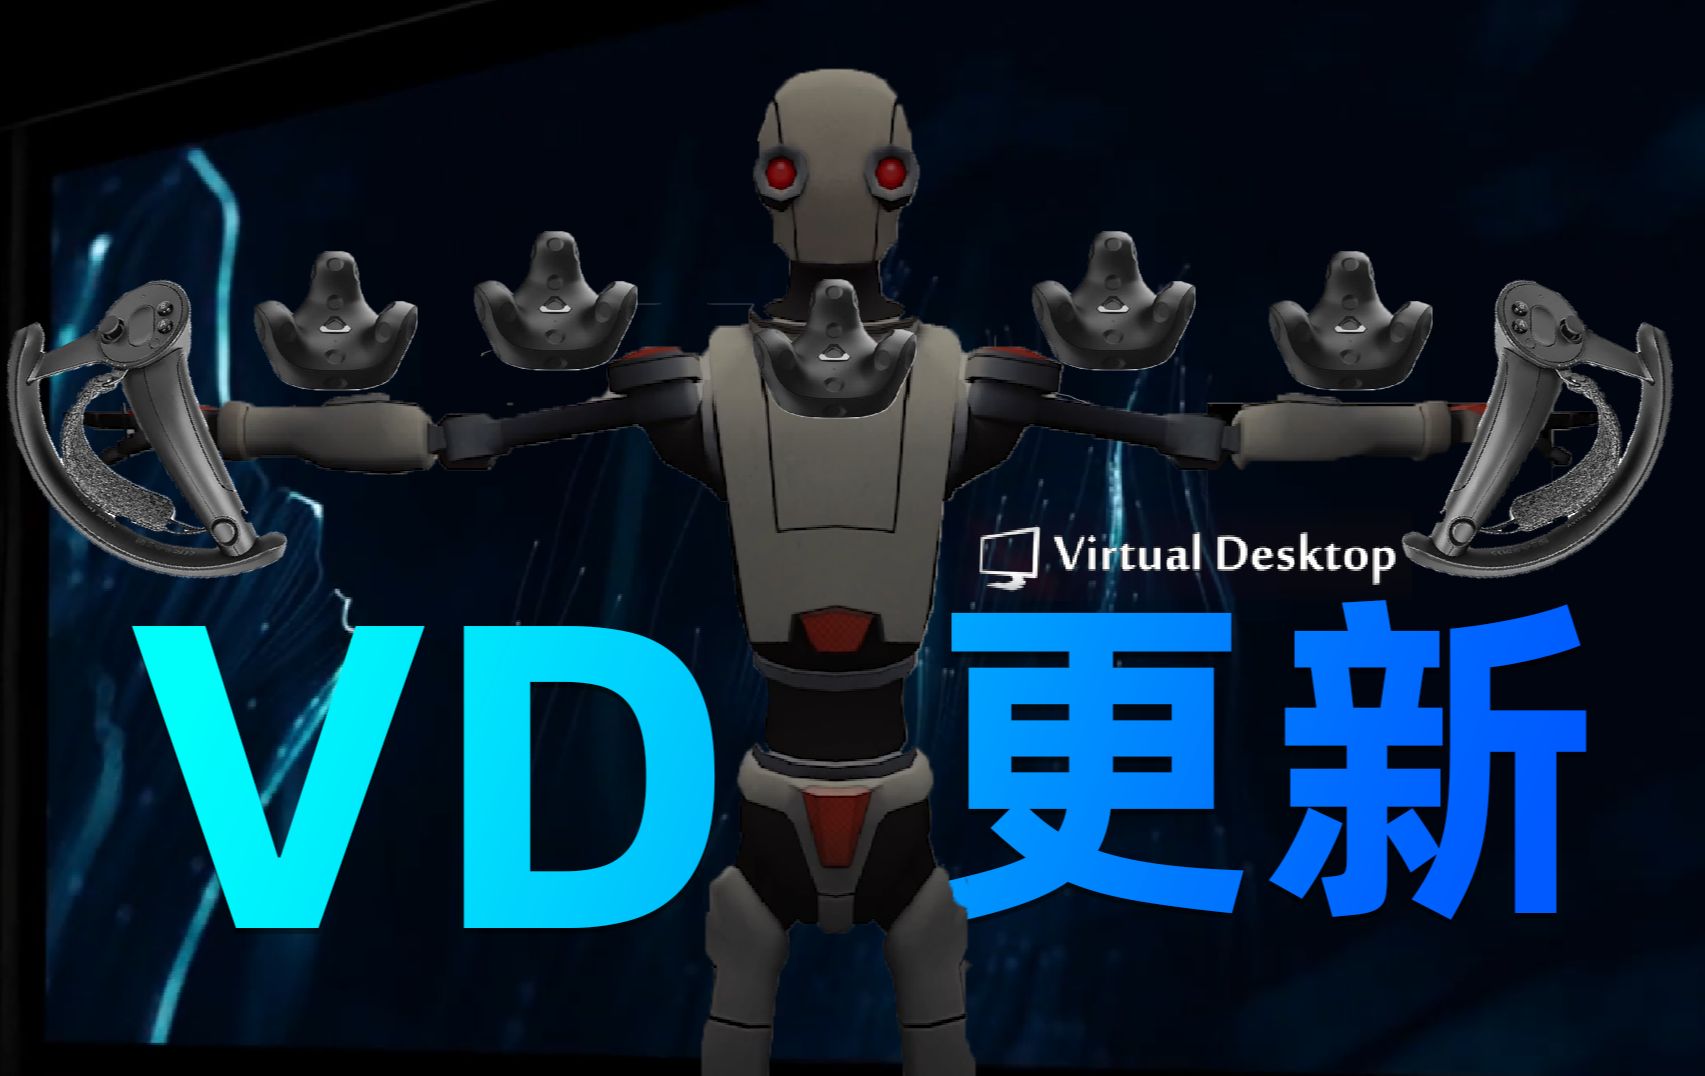 VD给Quest用户免费发了五颗VIVE Tracker和指虎手柄...